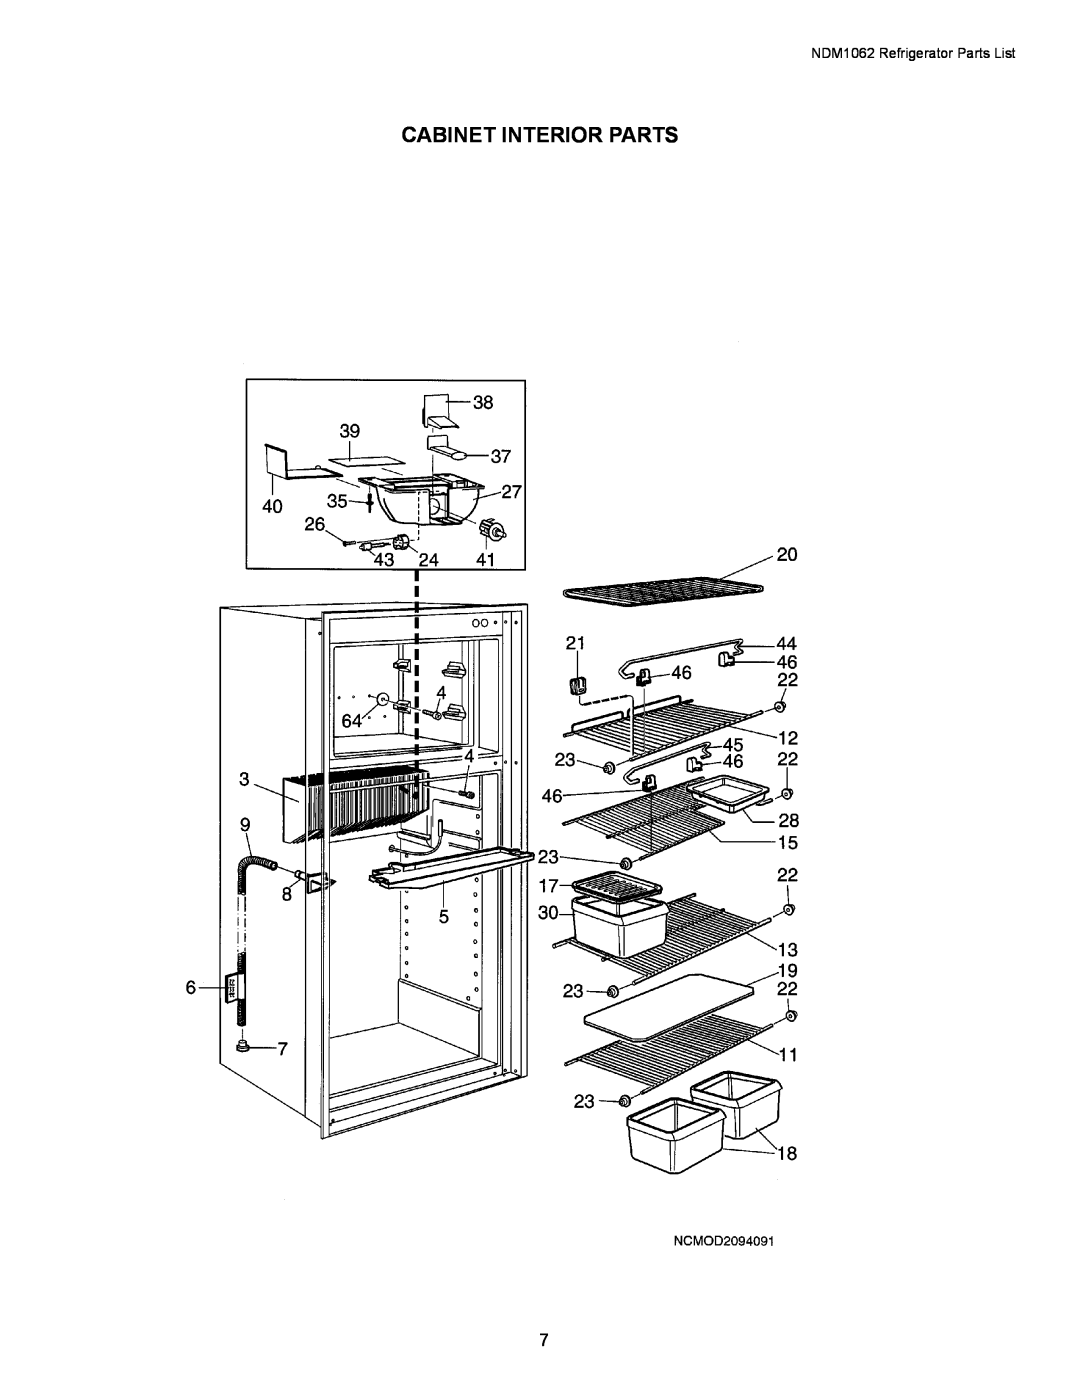 Dometic manual Cabinet Interior Parts, NDM1062 Refrigerator Parts List 